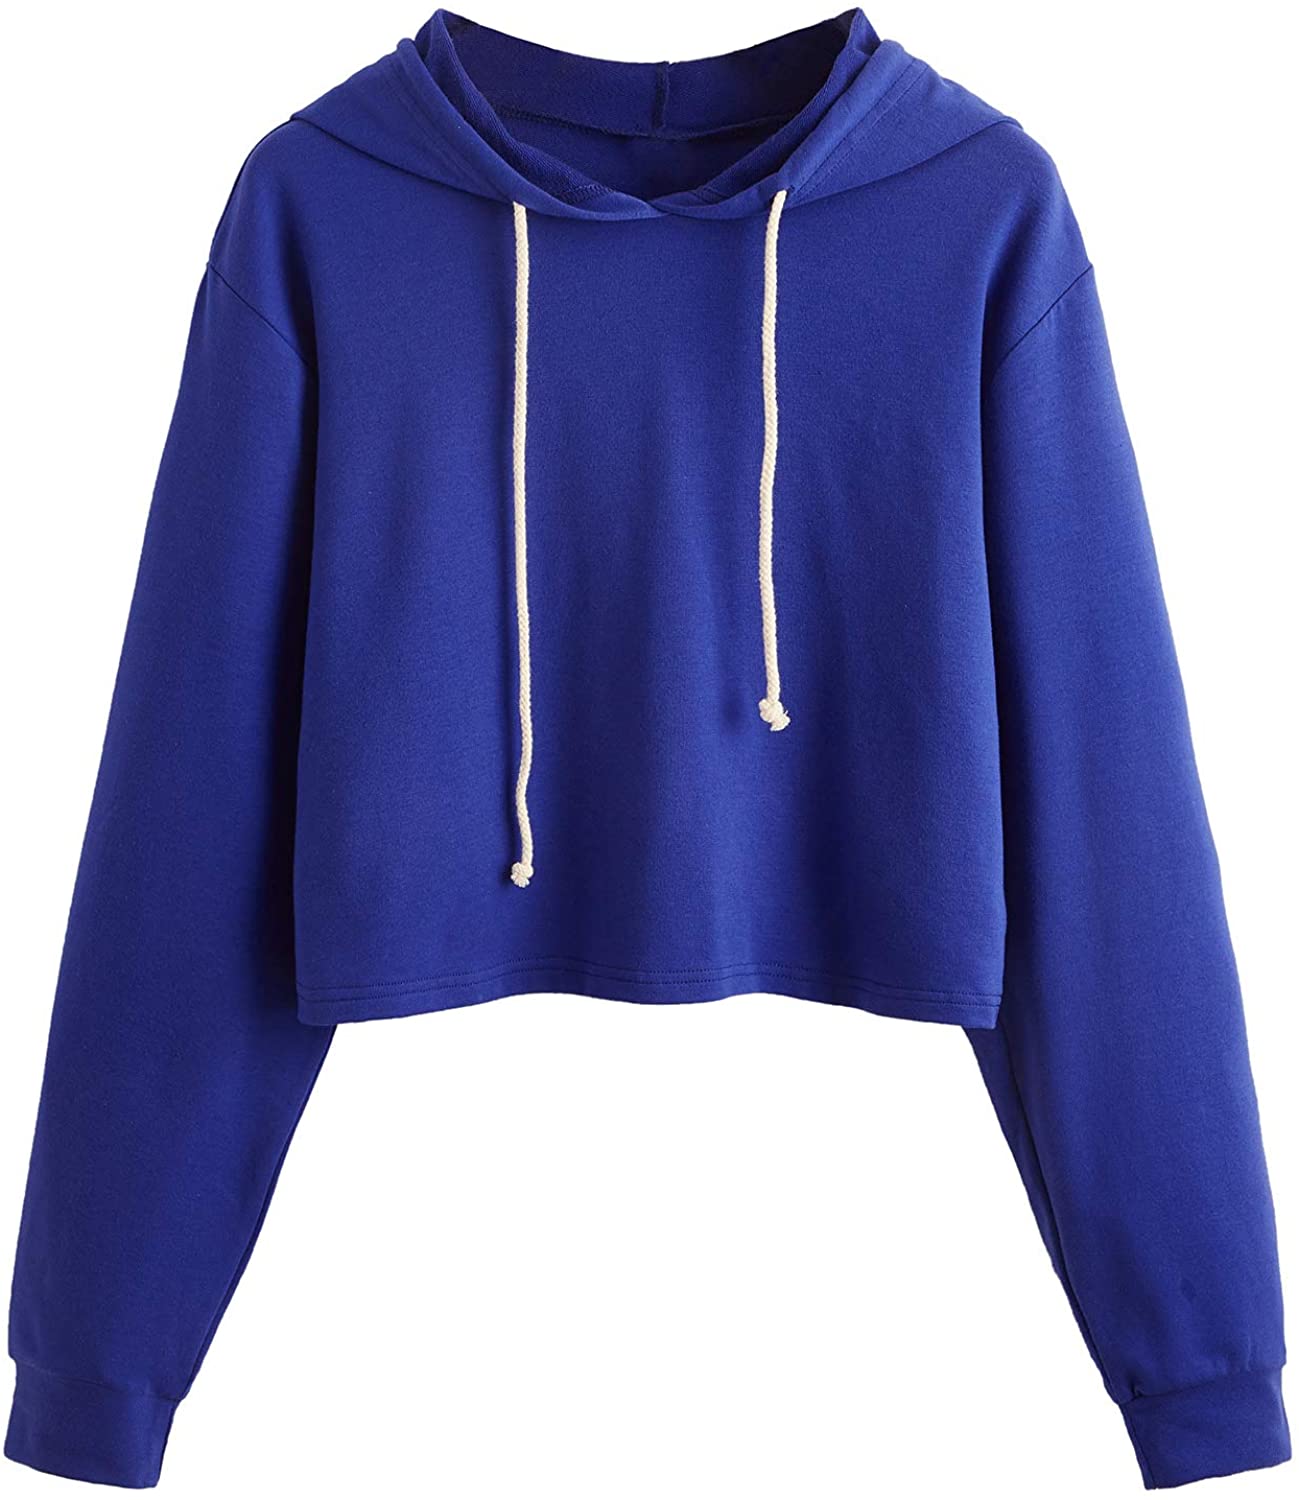 MAKEMECHIC Womens Casual Long Sleeve Color Block Crop Top Pullover Sweatshirt